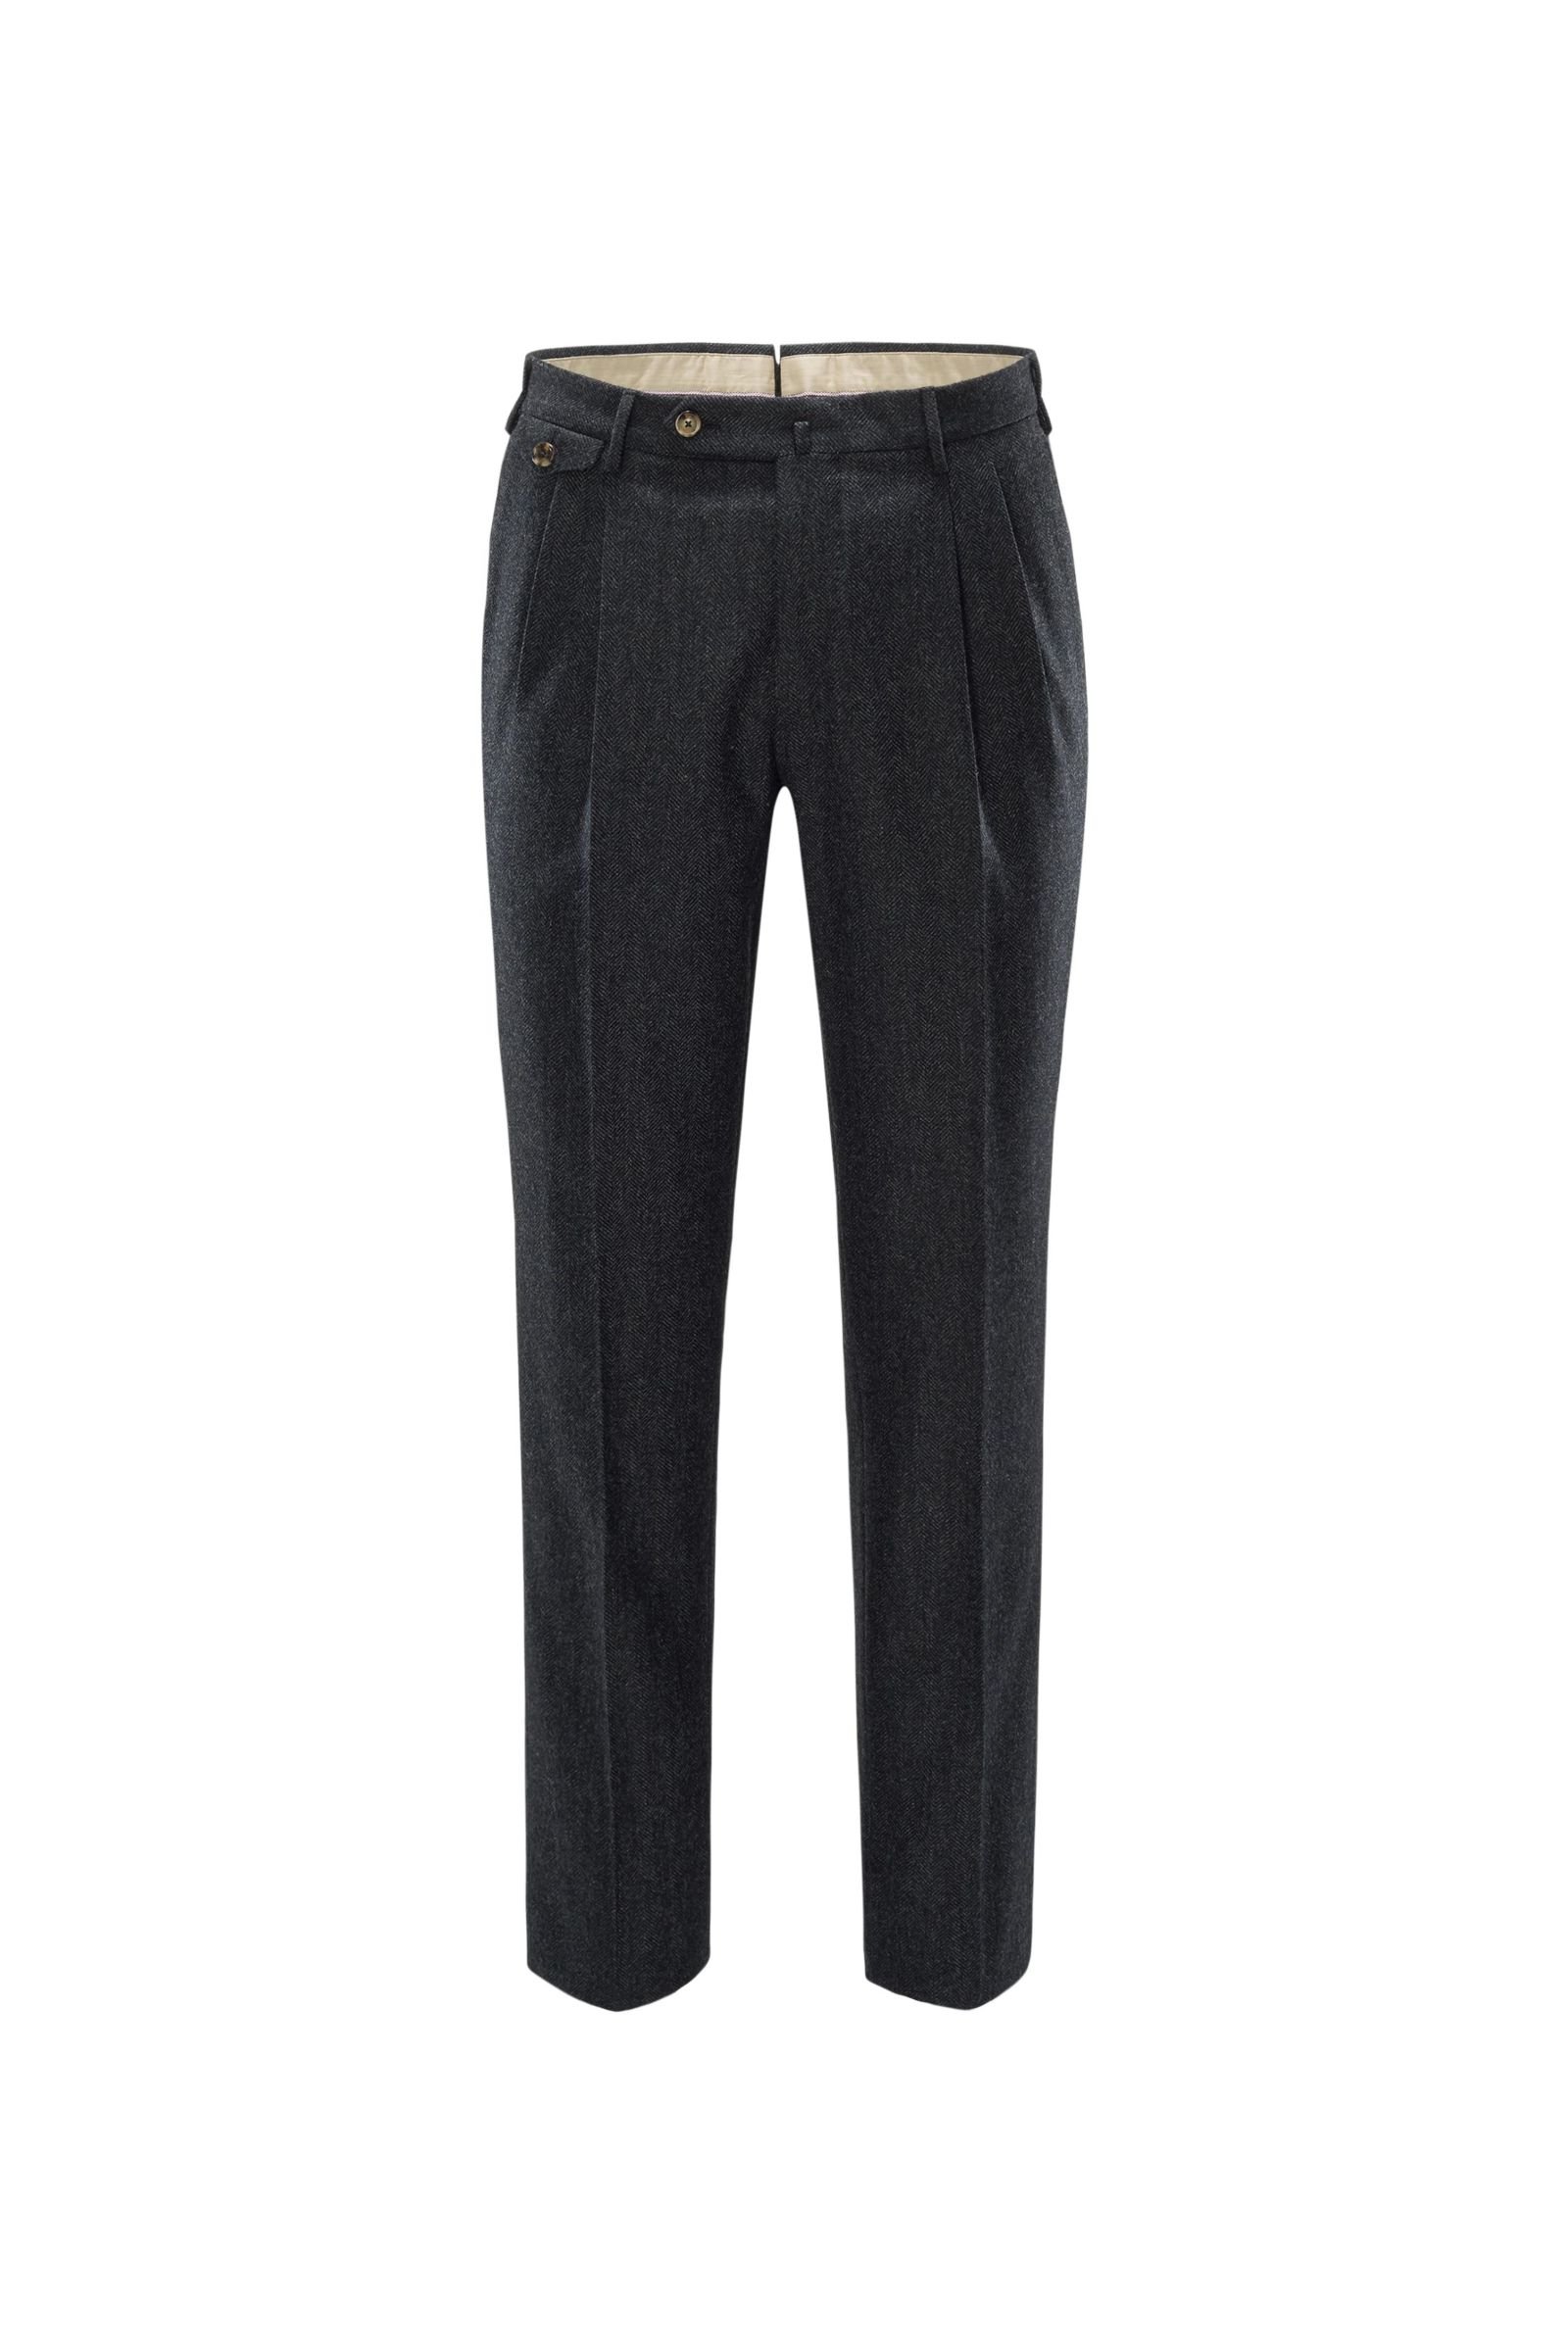 Wool trousers 'The Draper Gentleman Fit' grey/black patterned